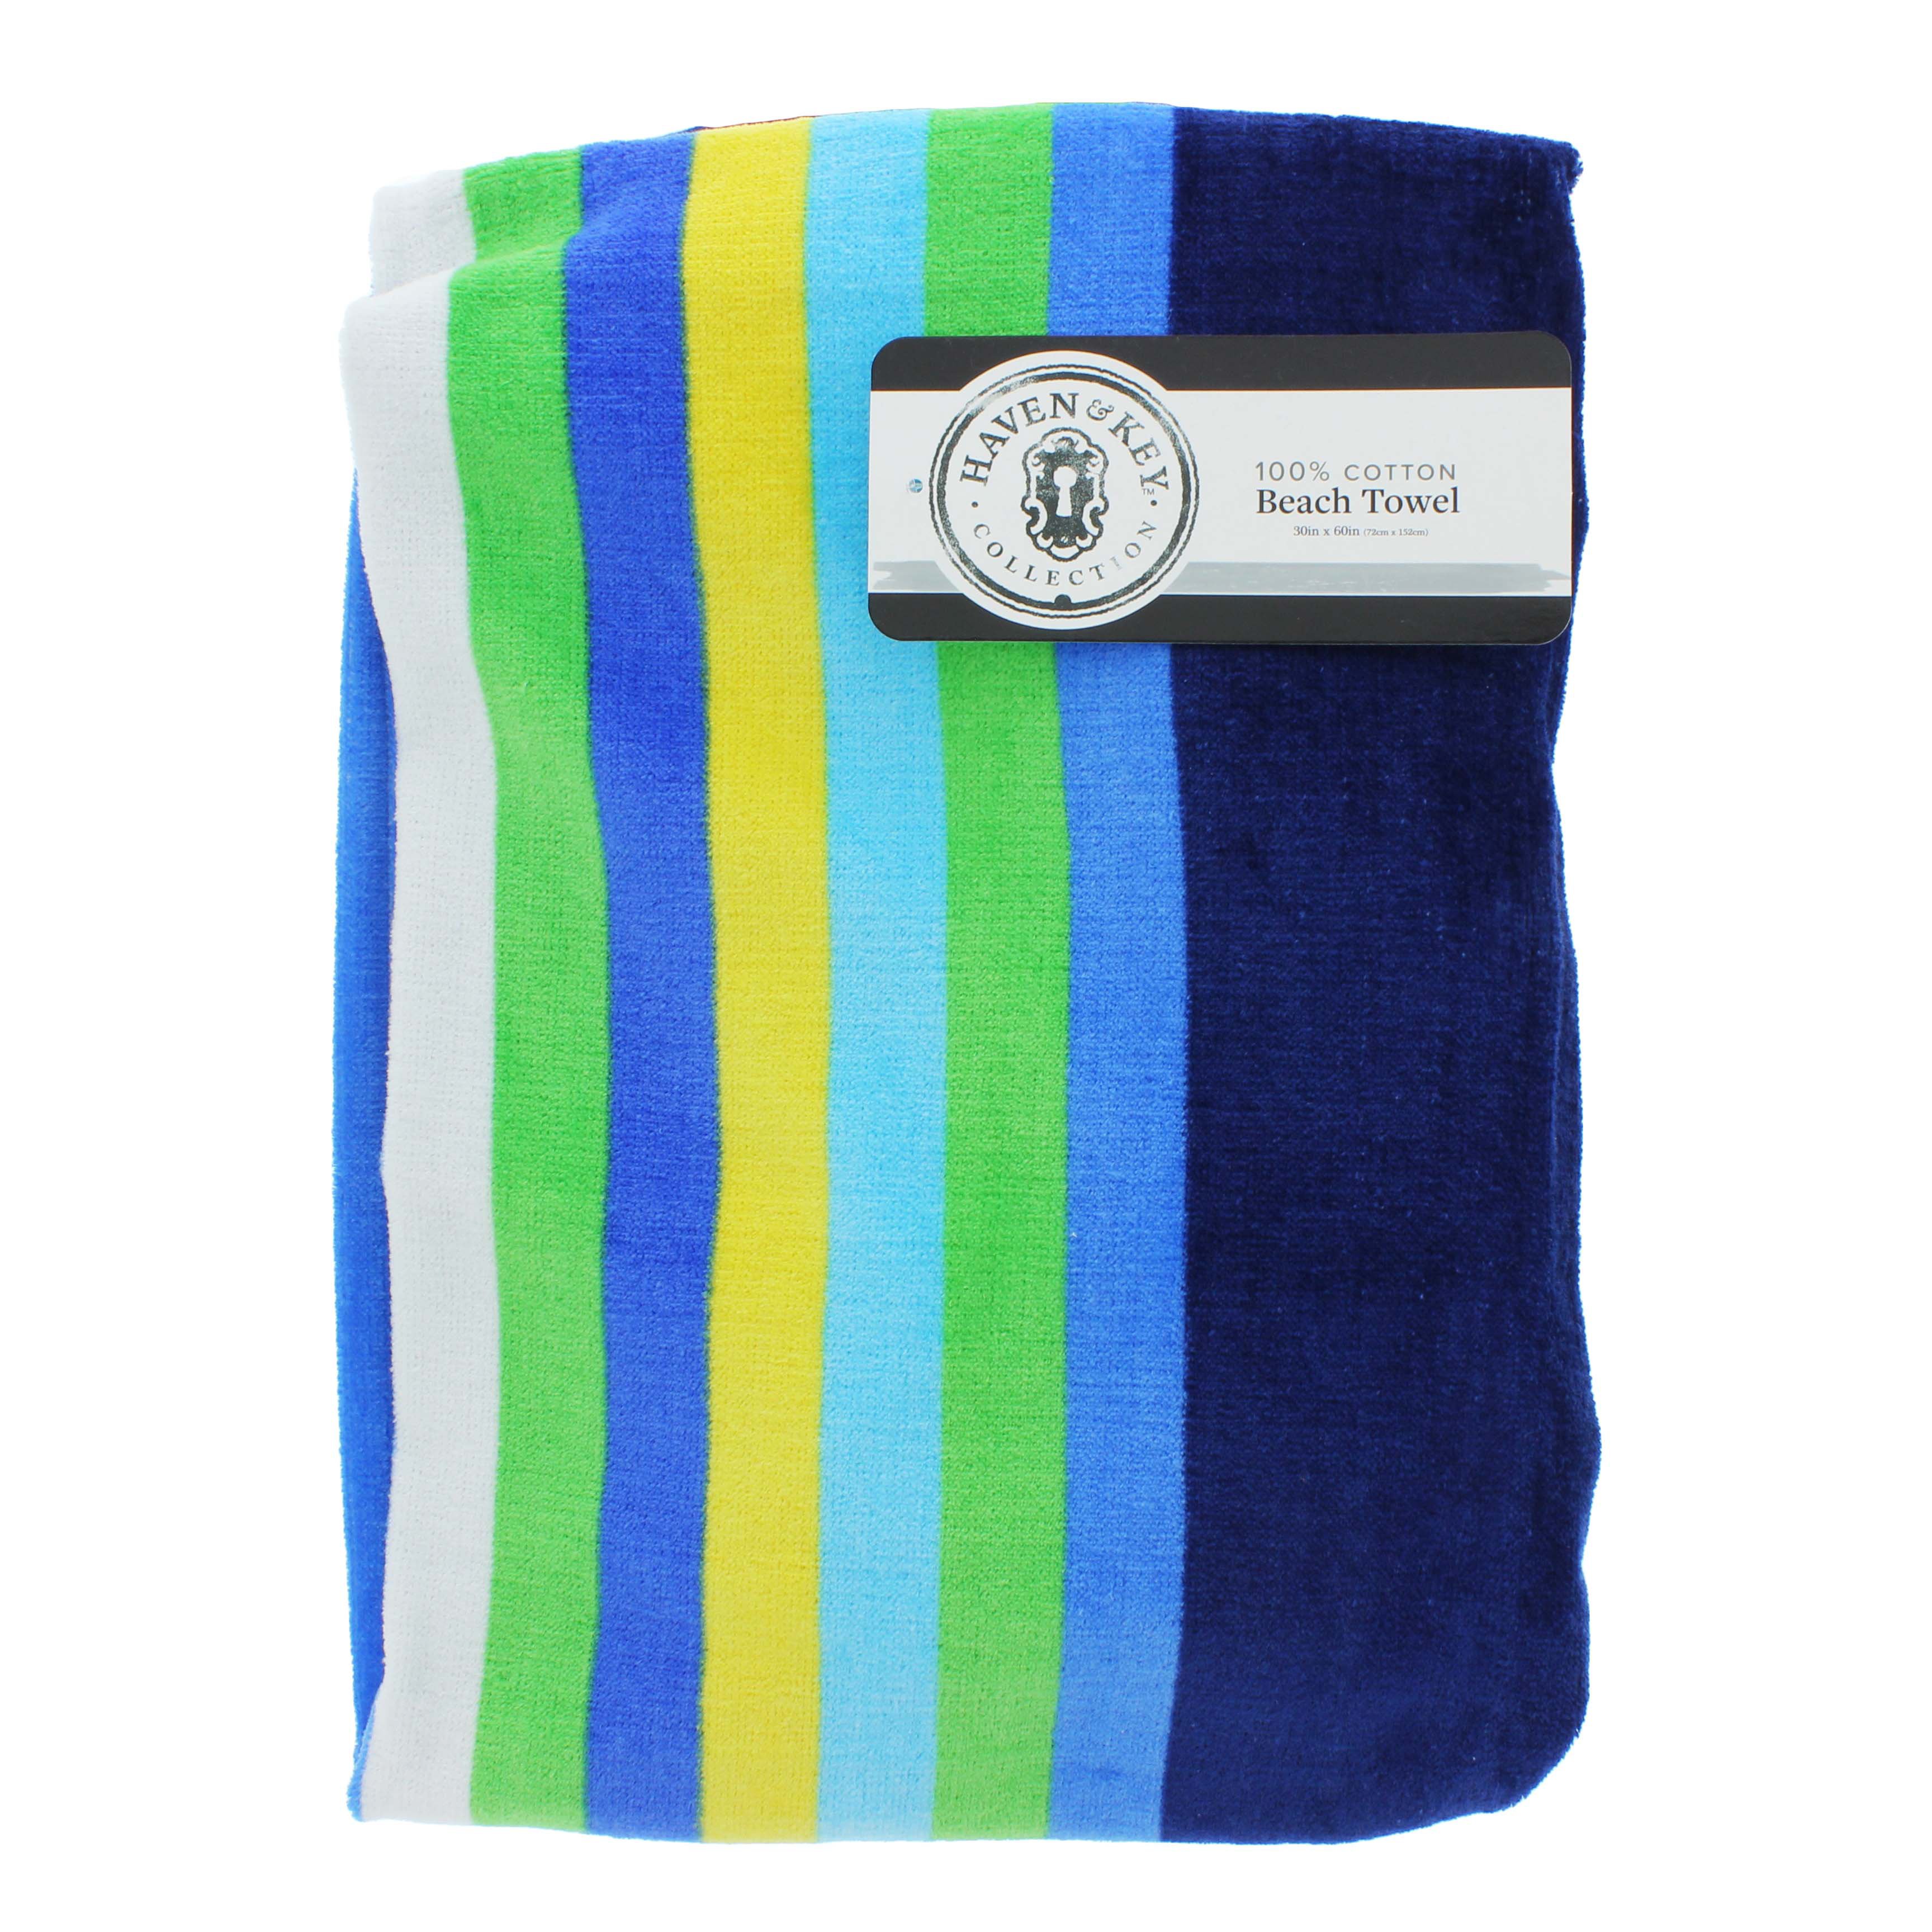 Haven & Key Beach Towel Geo/stripe - Shop Towels & Washcloths at H-E-B